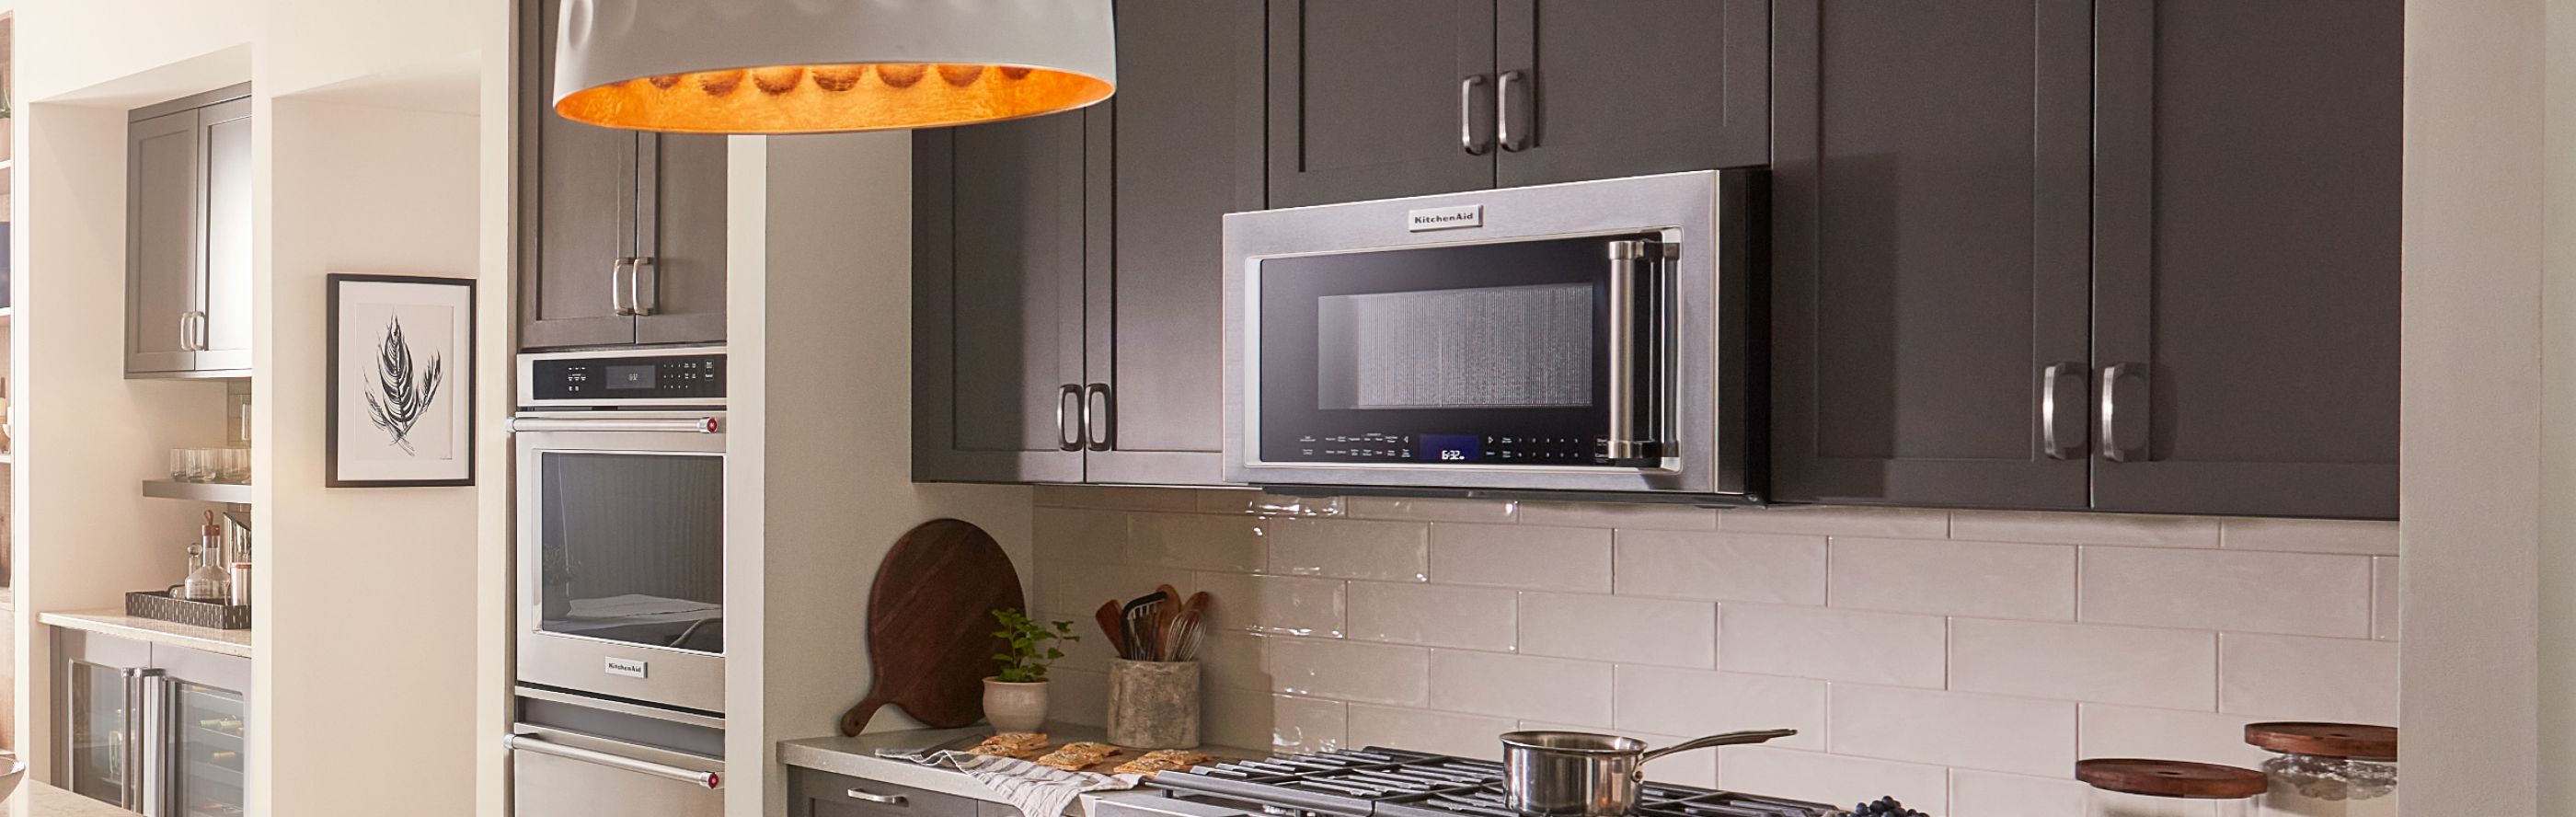 View of kitchen with KitchenAid® appliances